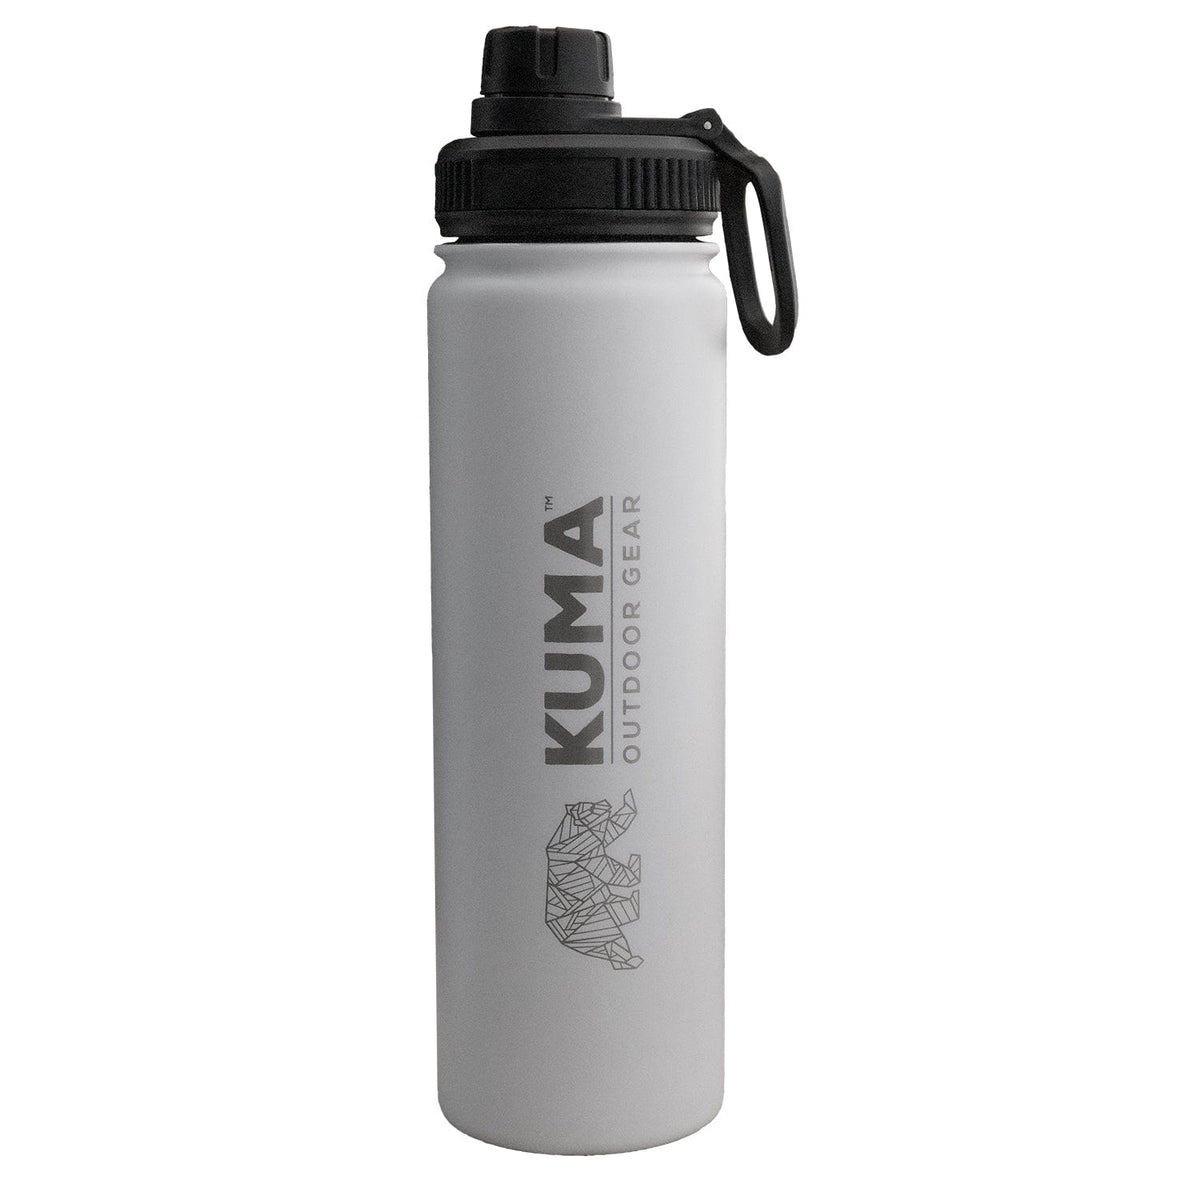 Kuma Outdoor Gear Qualifies for Free Shipping Kuma Outdoor Gear Bomber Bottle White #225-KM-BB-WH